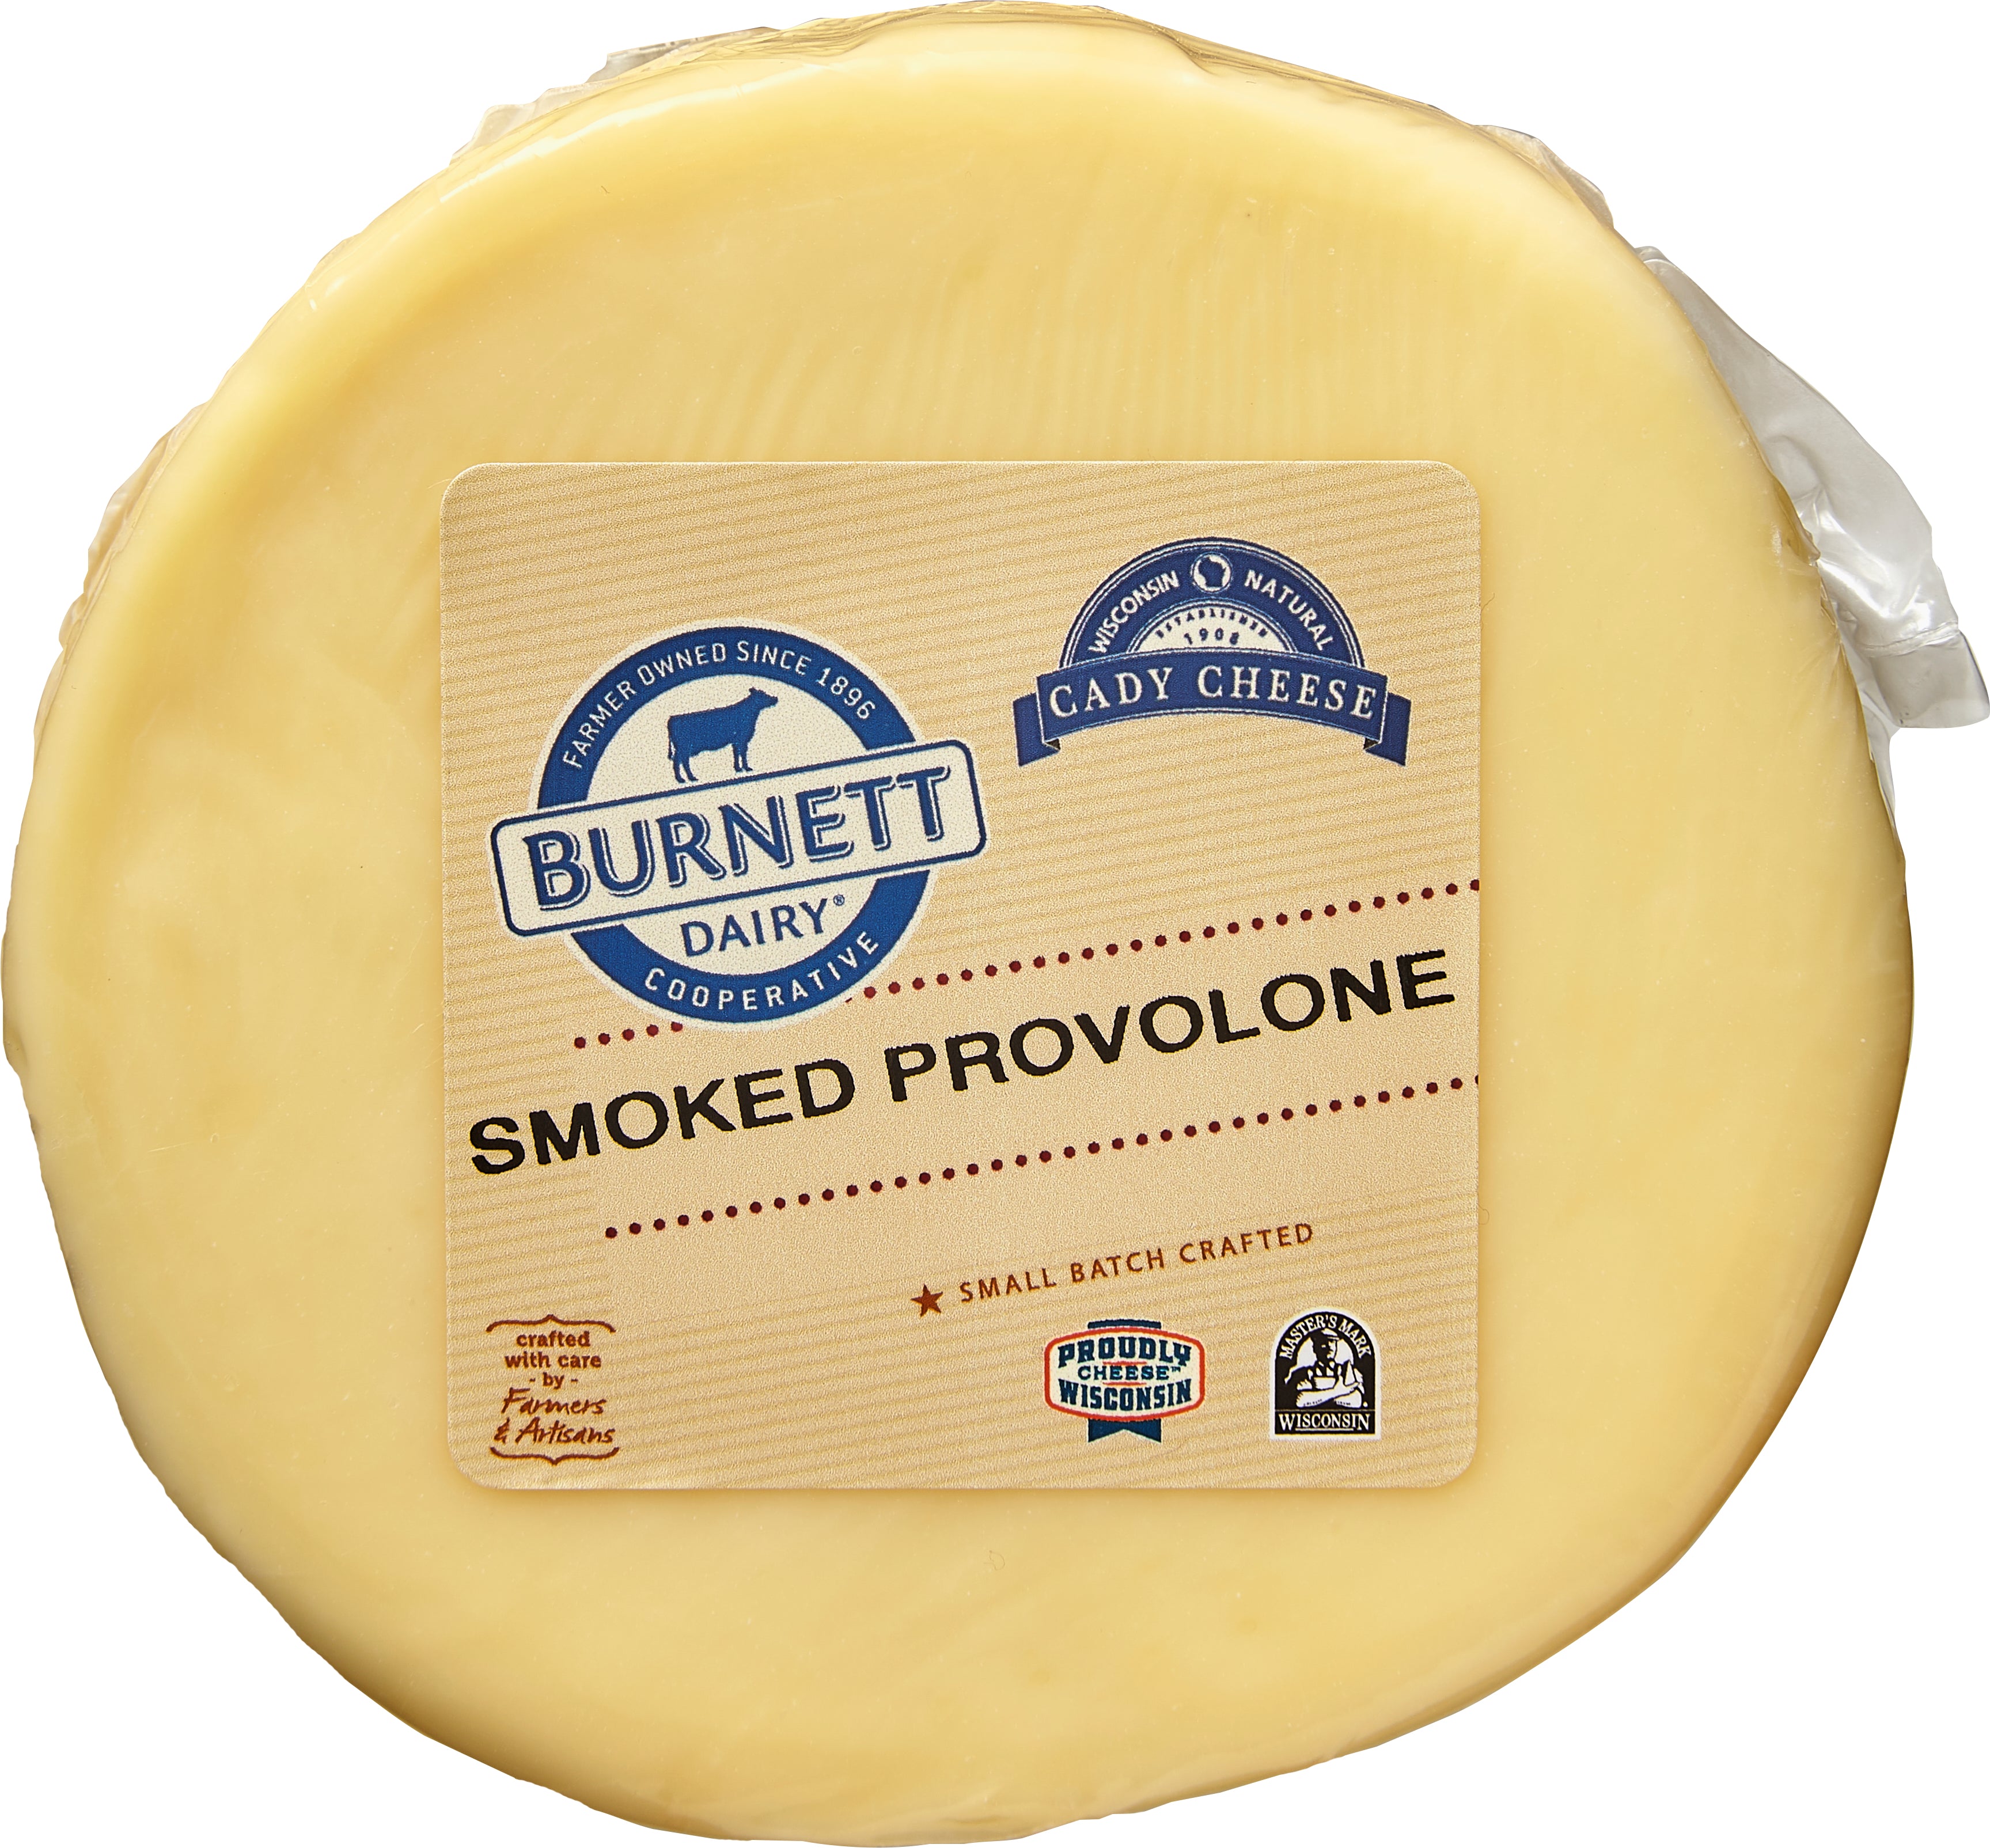 Smoked Provolone